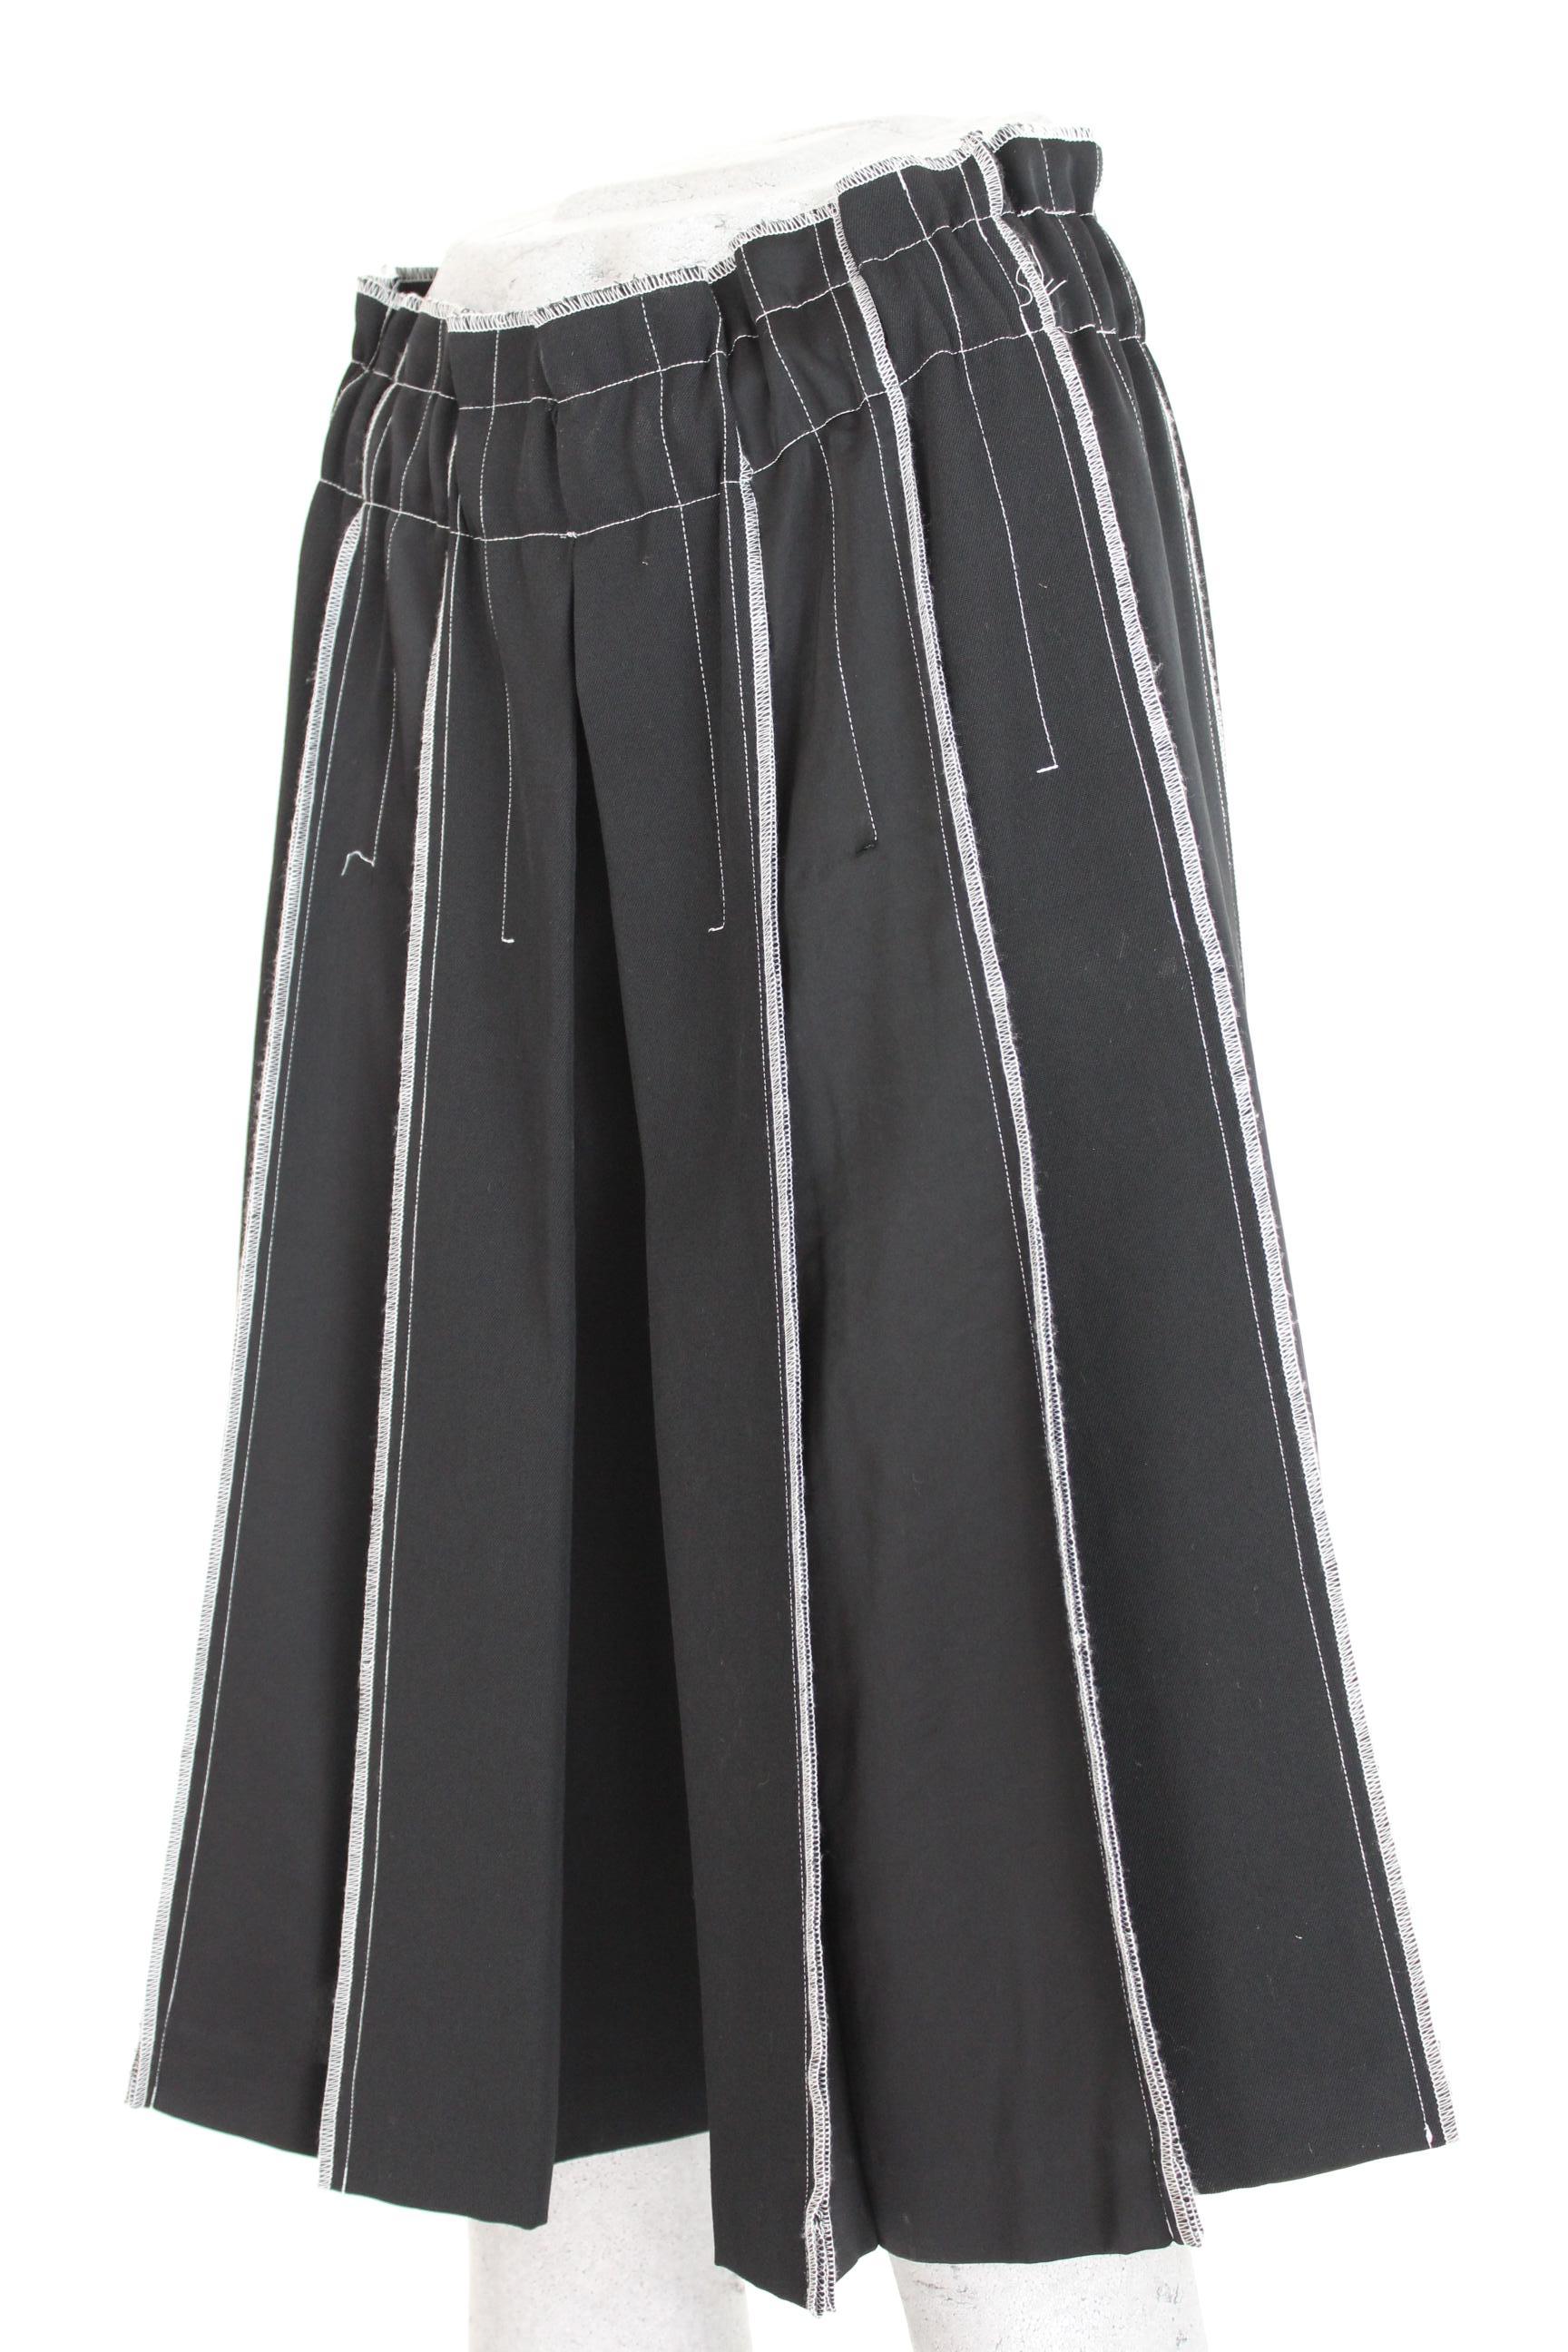 dkny black pleated skirt